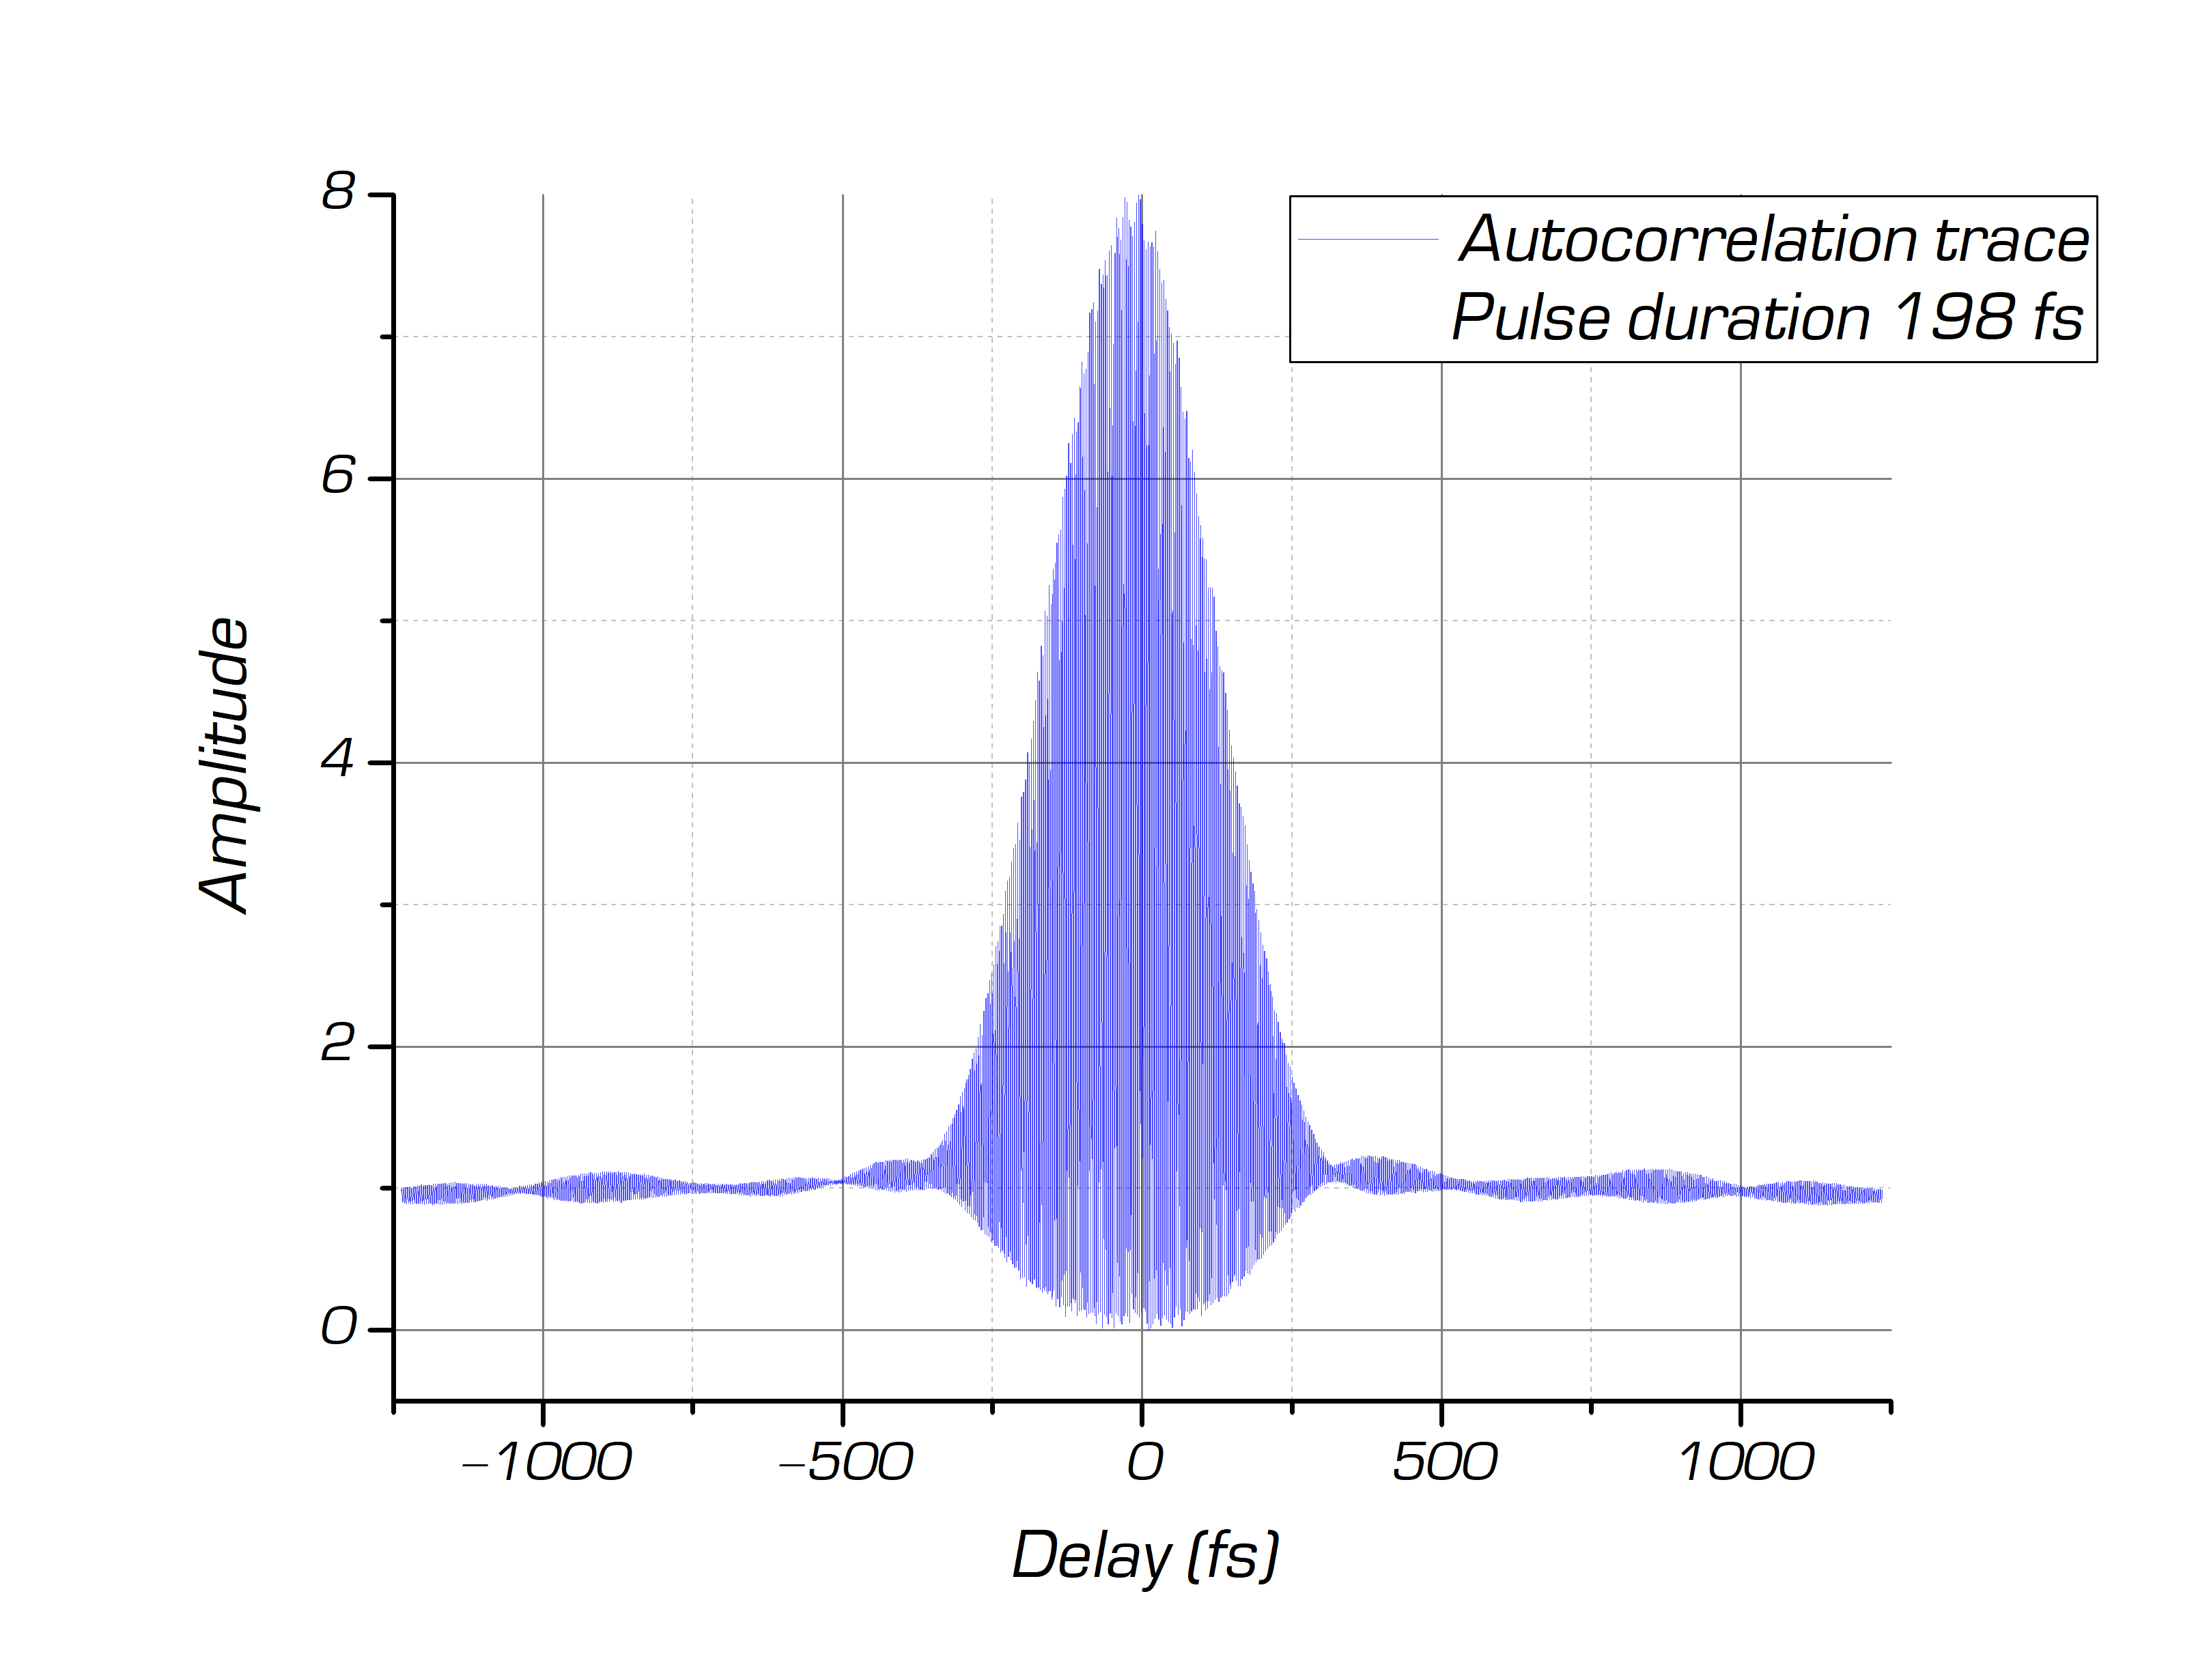 ANTAUS-10W-4u/2.5M typical IAC trace (4 uJ, 2.5 MHz, 10 W, pulse duration 198 fs with Gaussian fit)